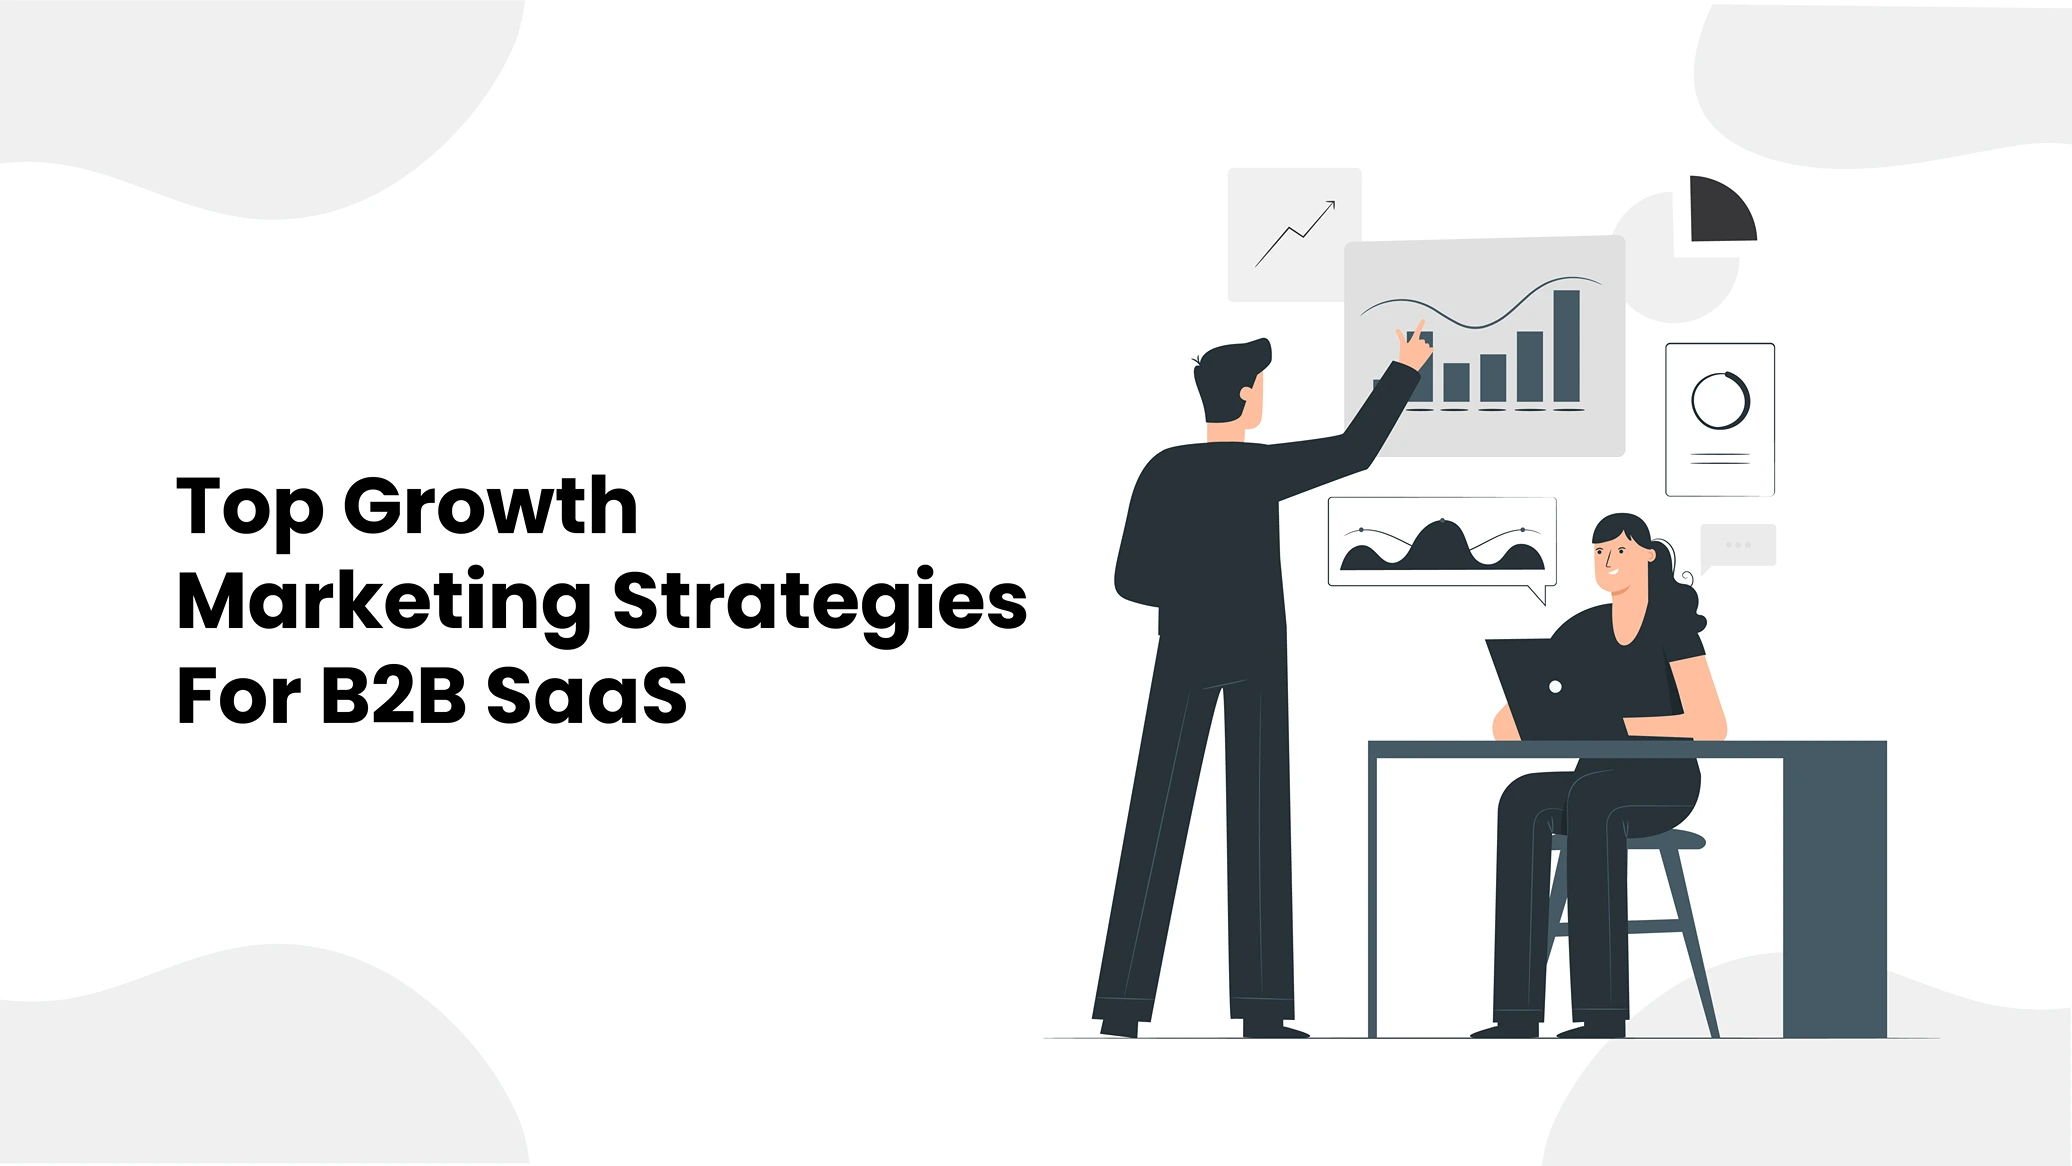 Top Growth Marketing Strategies For B2B SaaS